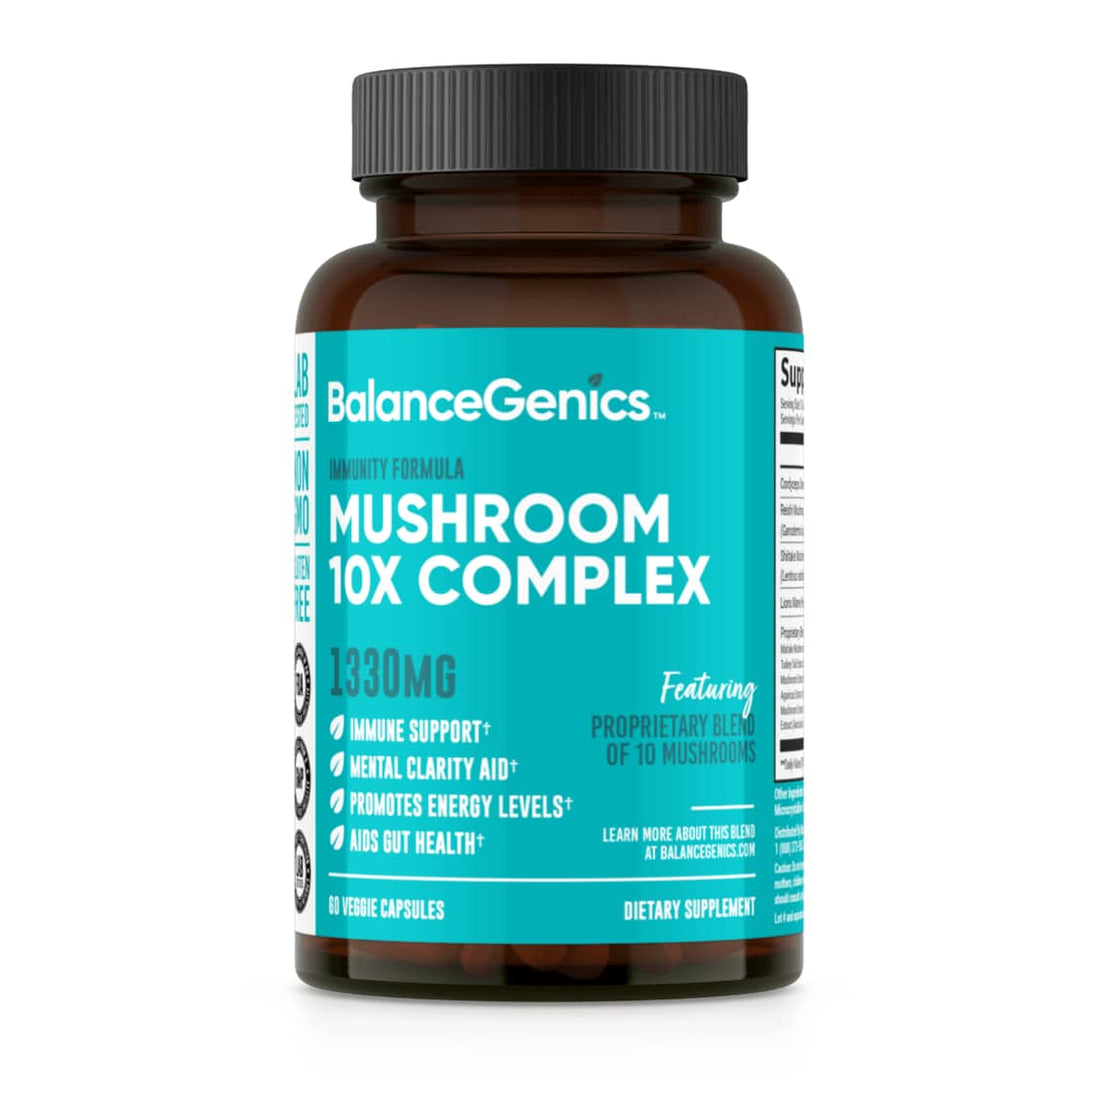 BalanceGenics Mushroom 10X Complex